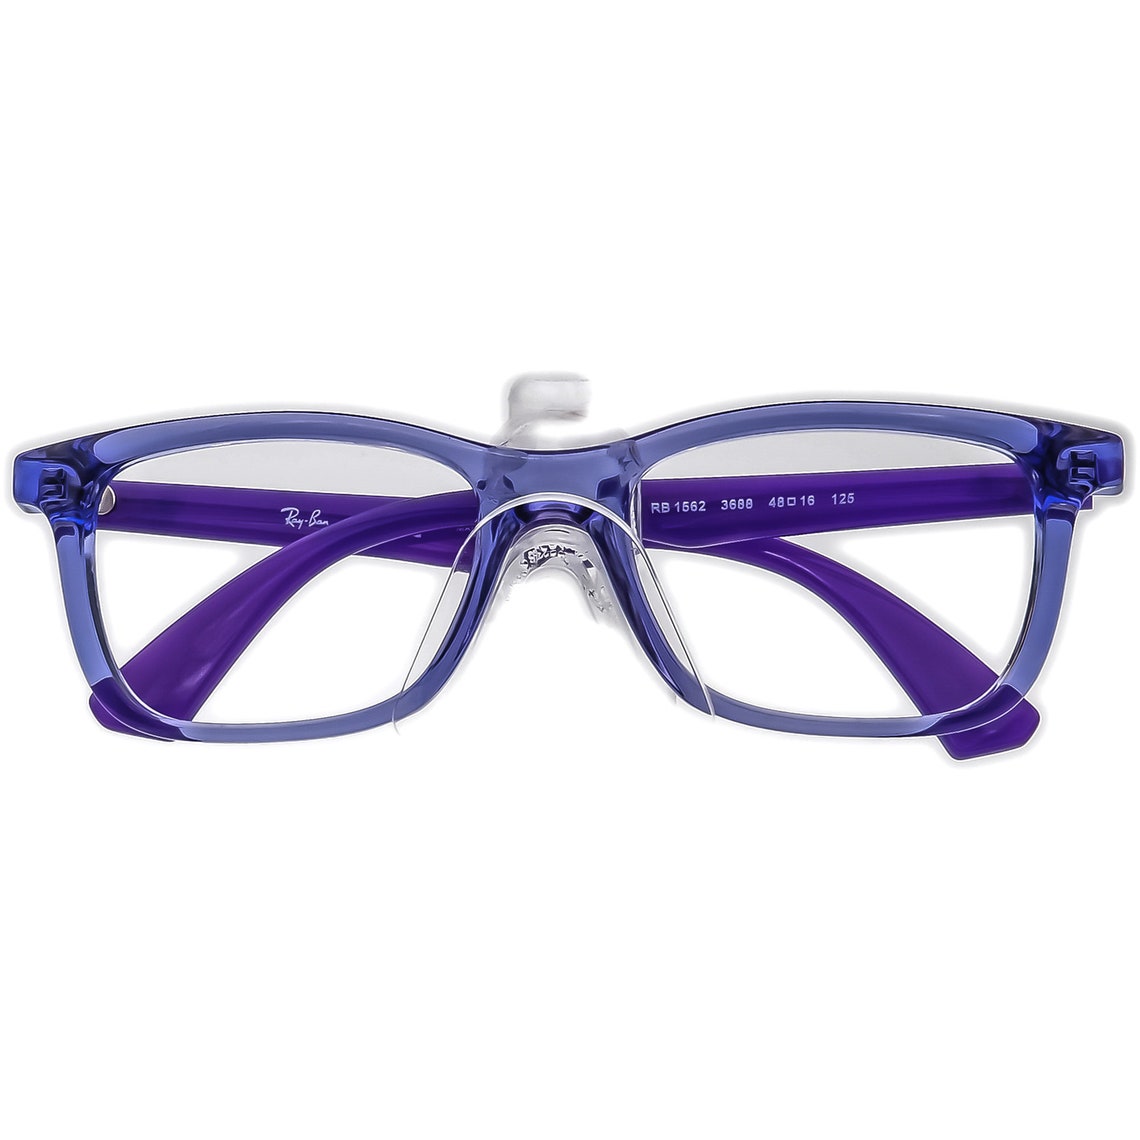 Ray Ban Small Eyeglasses Rb 1562 3688 Purple Rectangular Frame Etsy